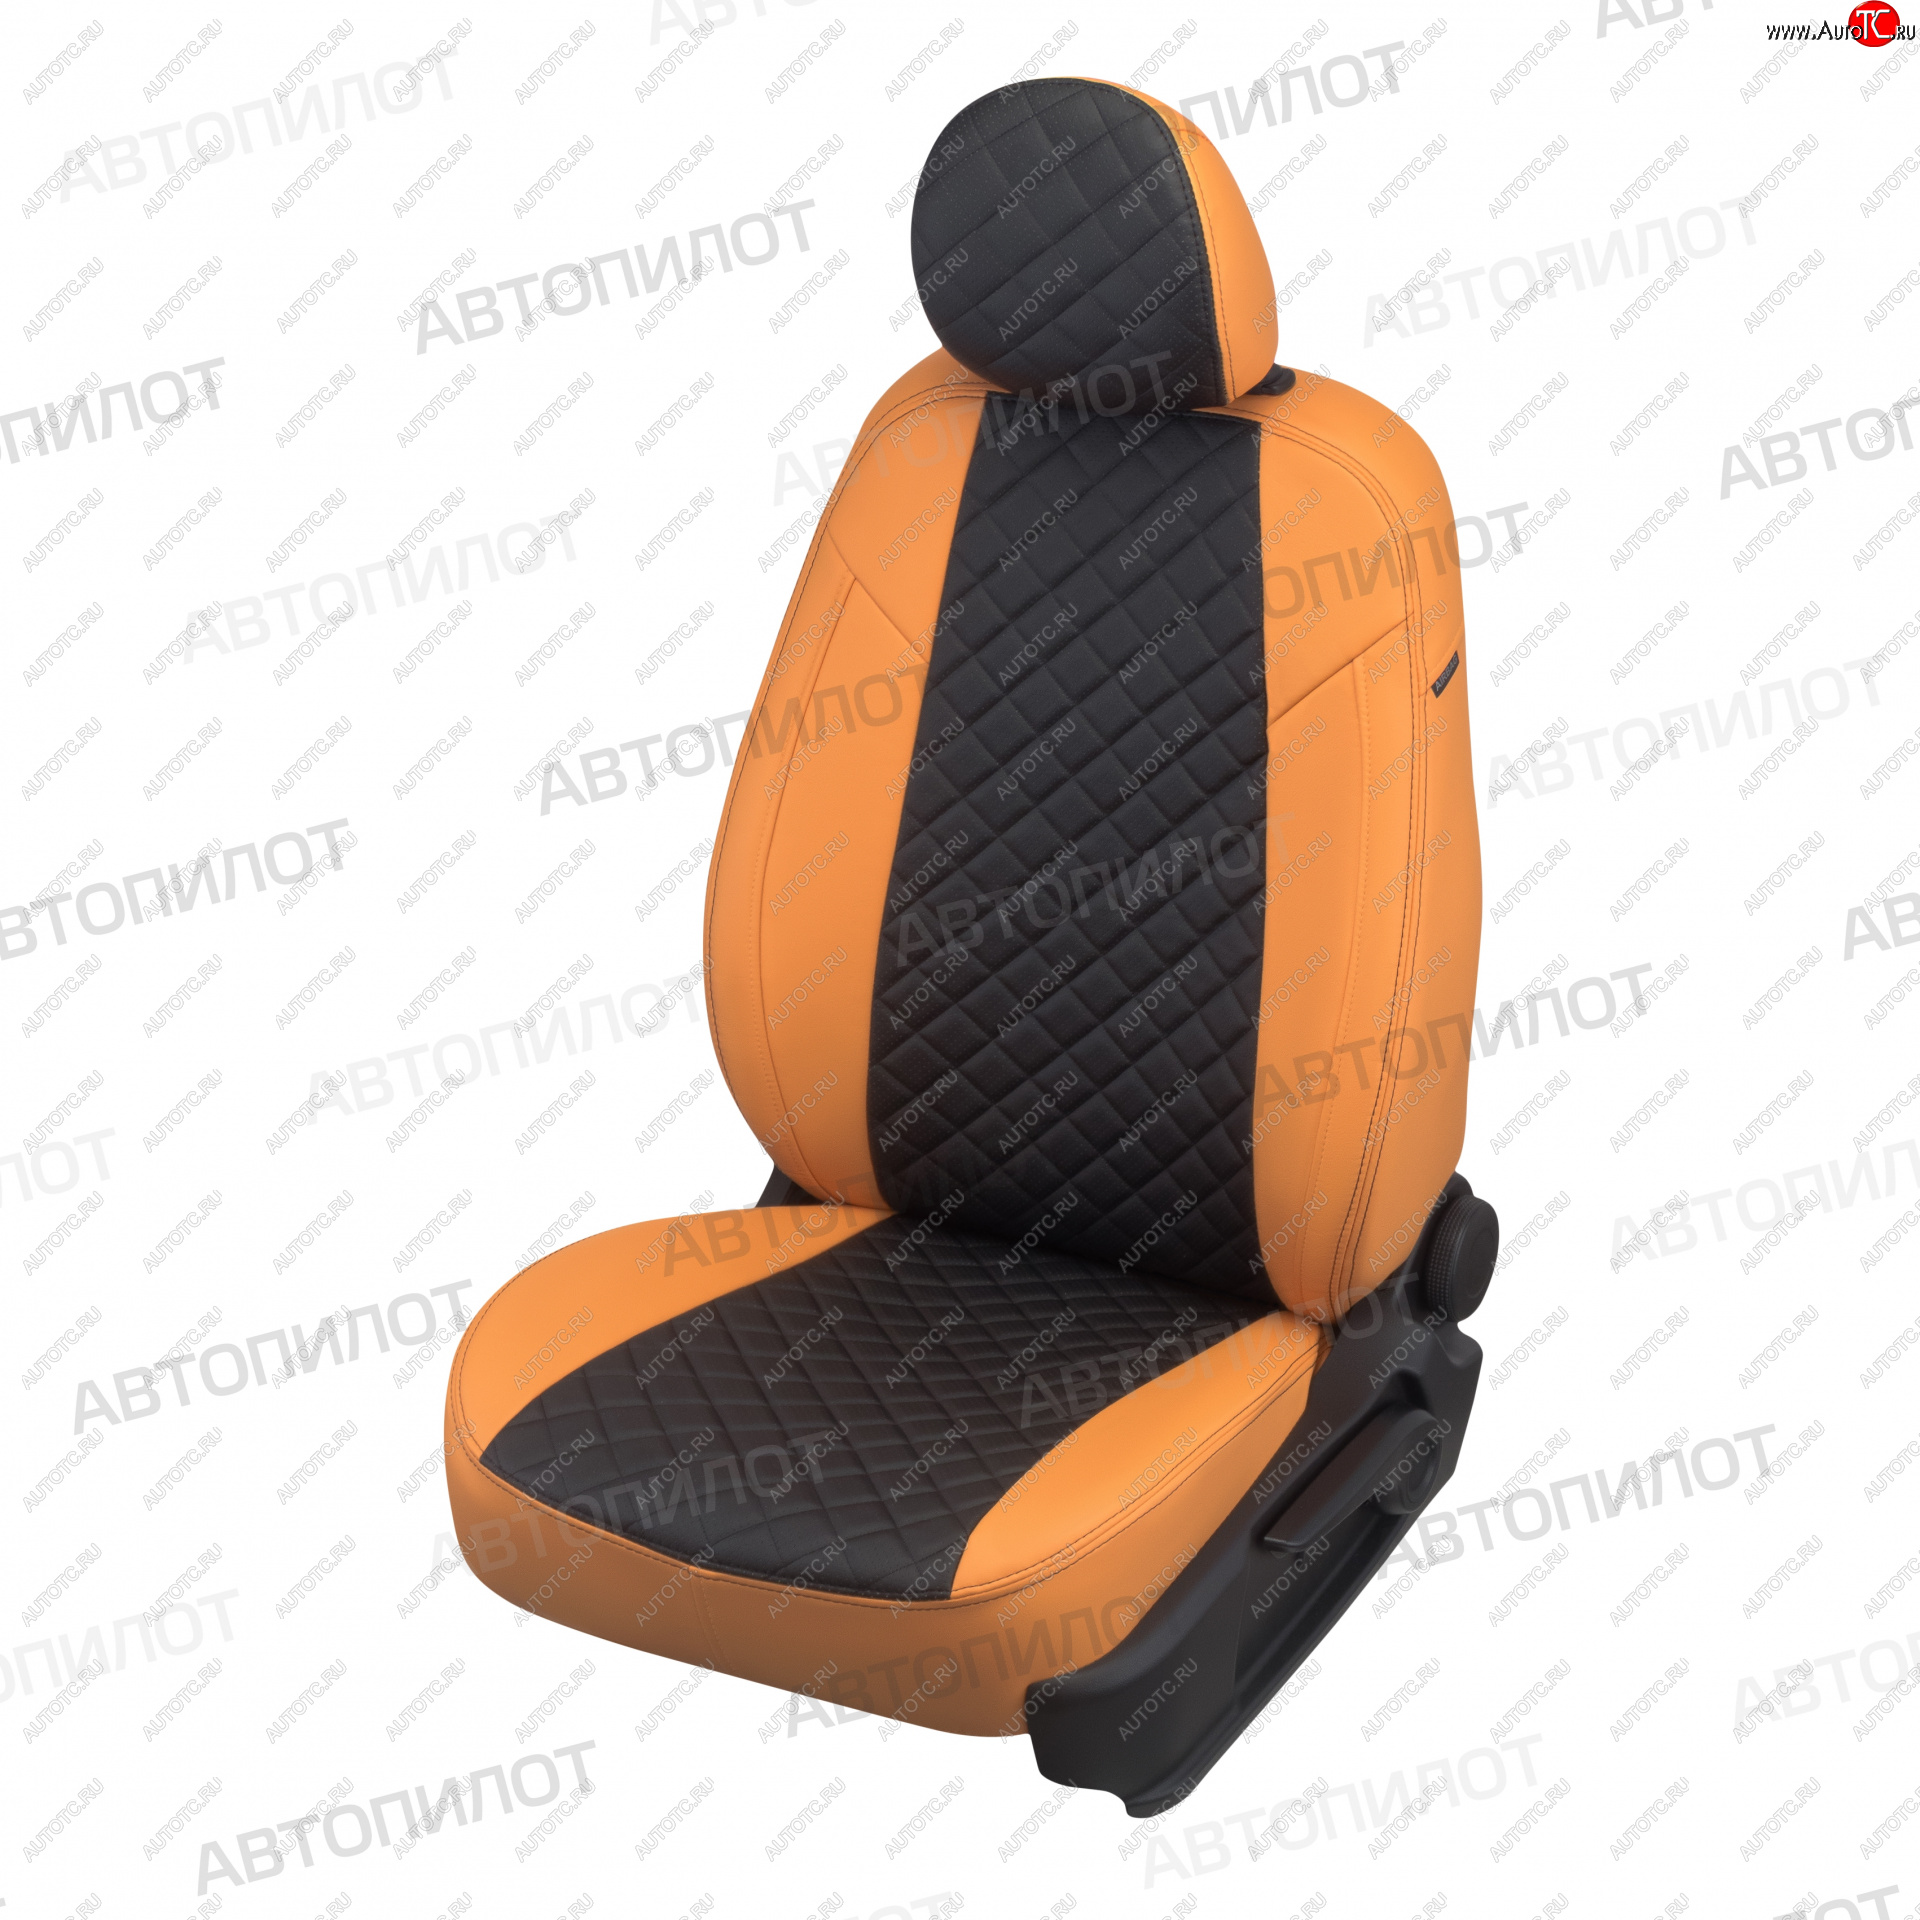 13 999 р. Чехлы сидений (экокожа) Автопилот Ромб  KIA Ceed  1 ED (2006-2012) (оранж/черный)